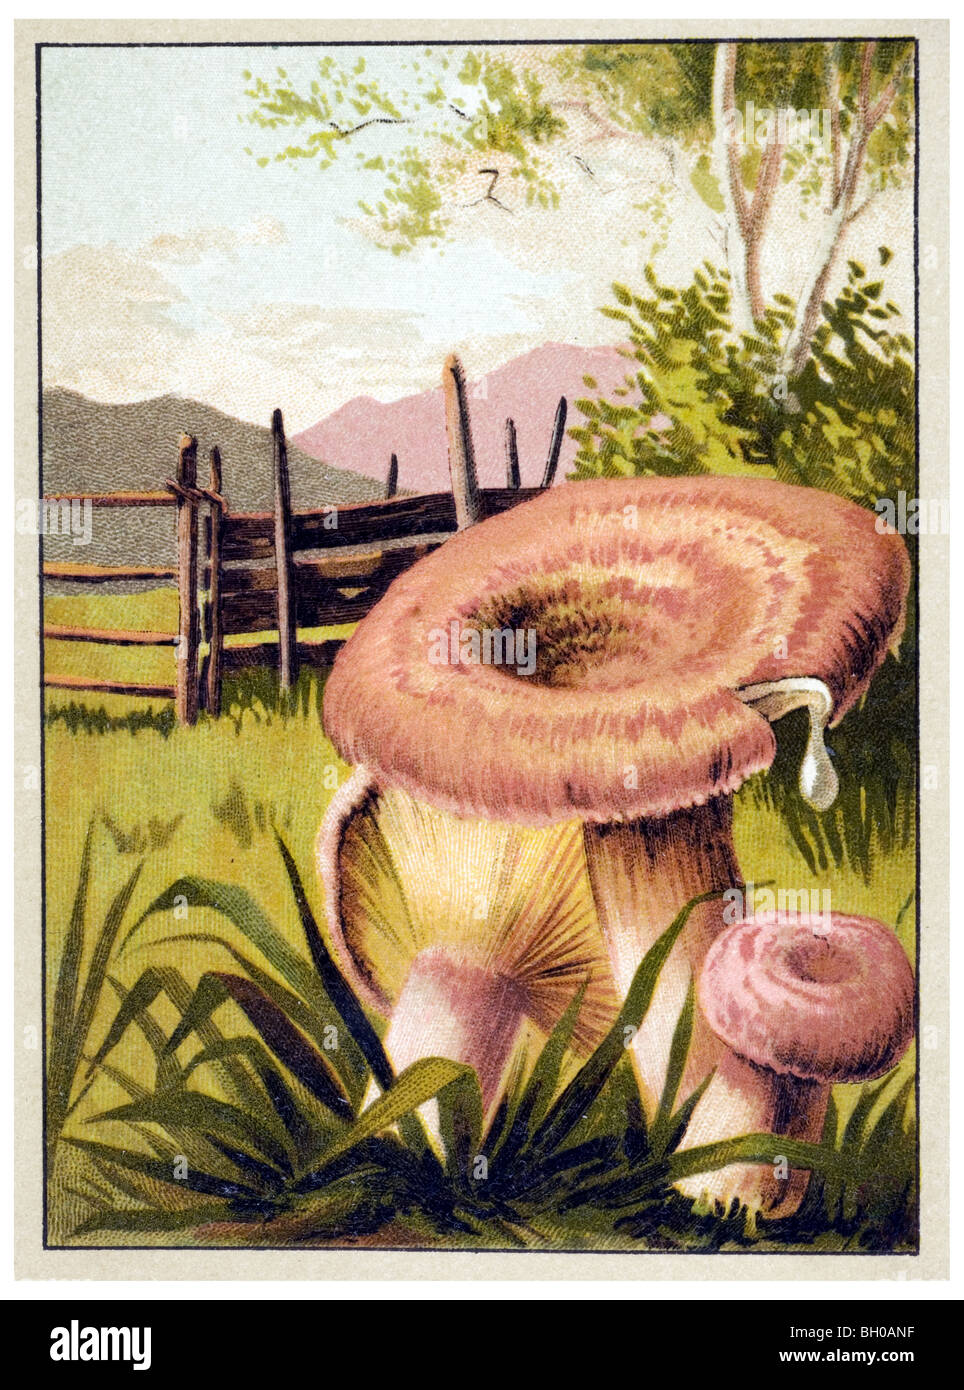 Woolly milk-cap mushroom toadstool, fungus Stock Photo